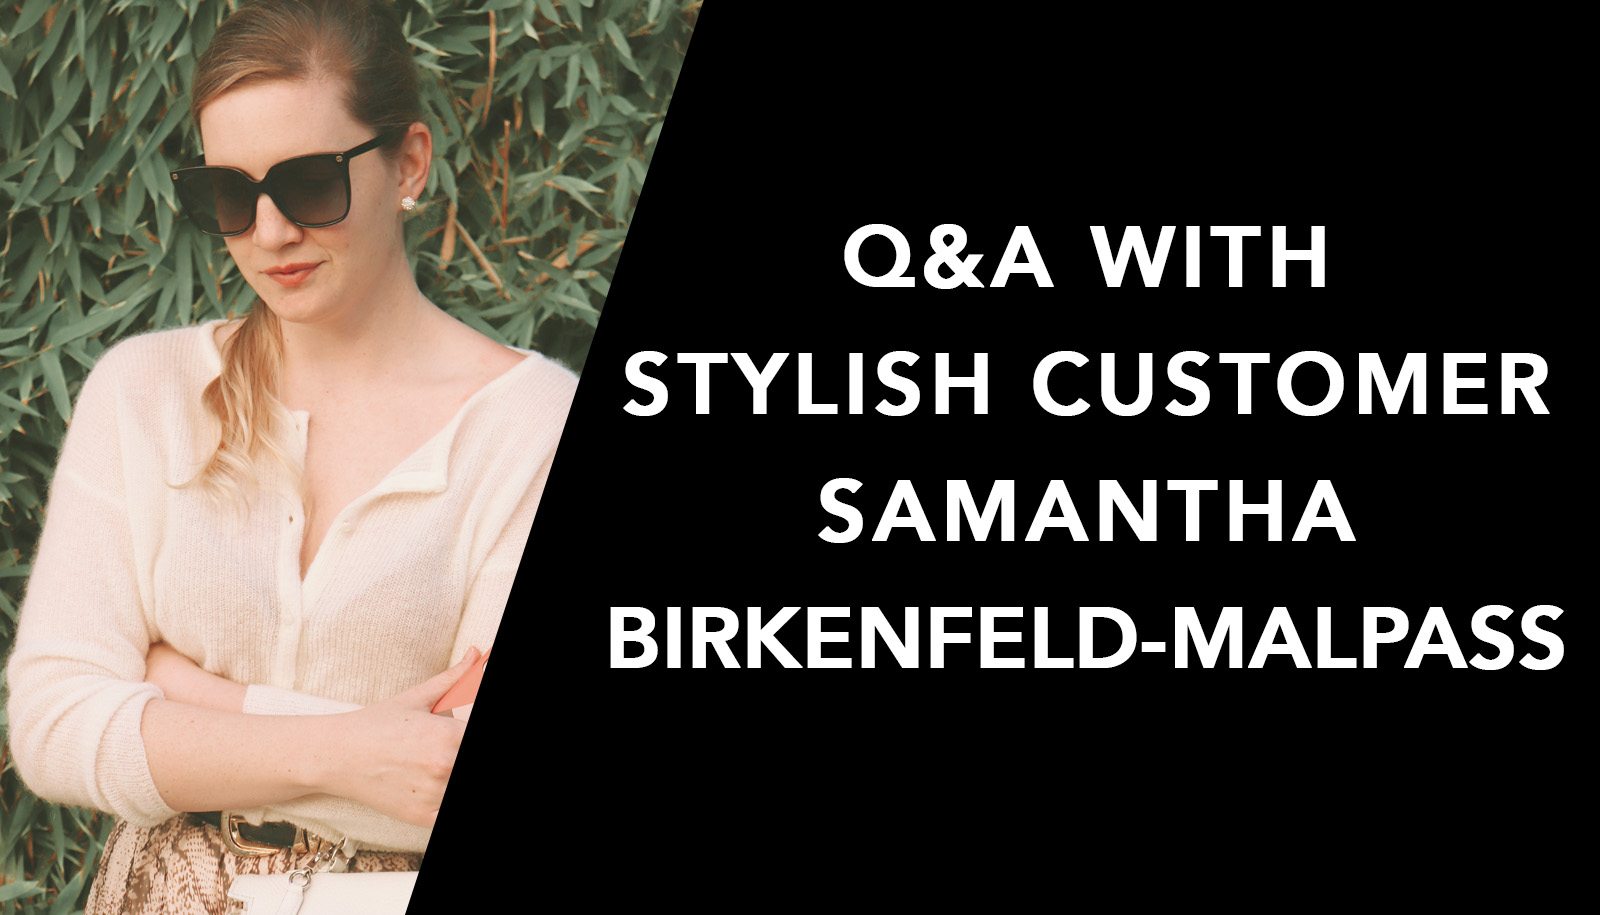 Stylish Customer: Q&A with Samantha Birkenfeld-Malpass